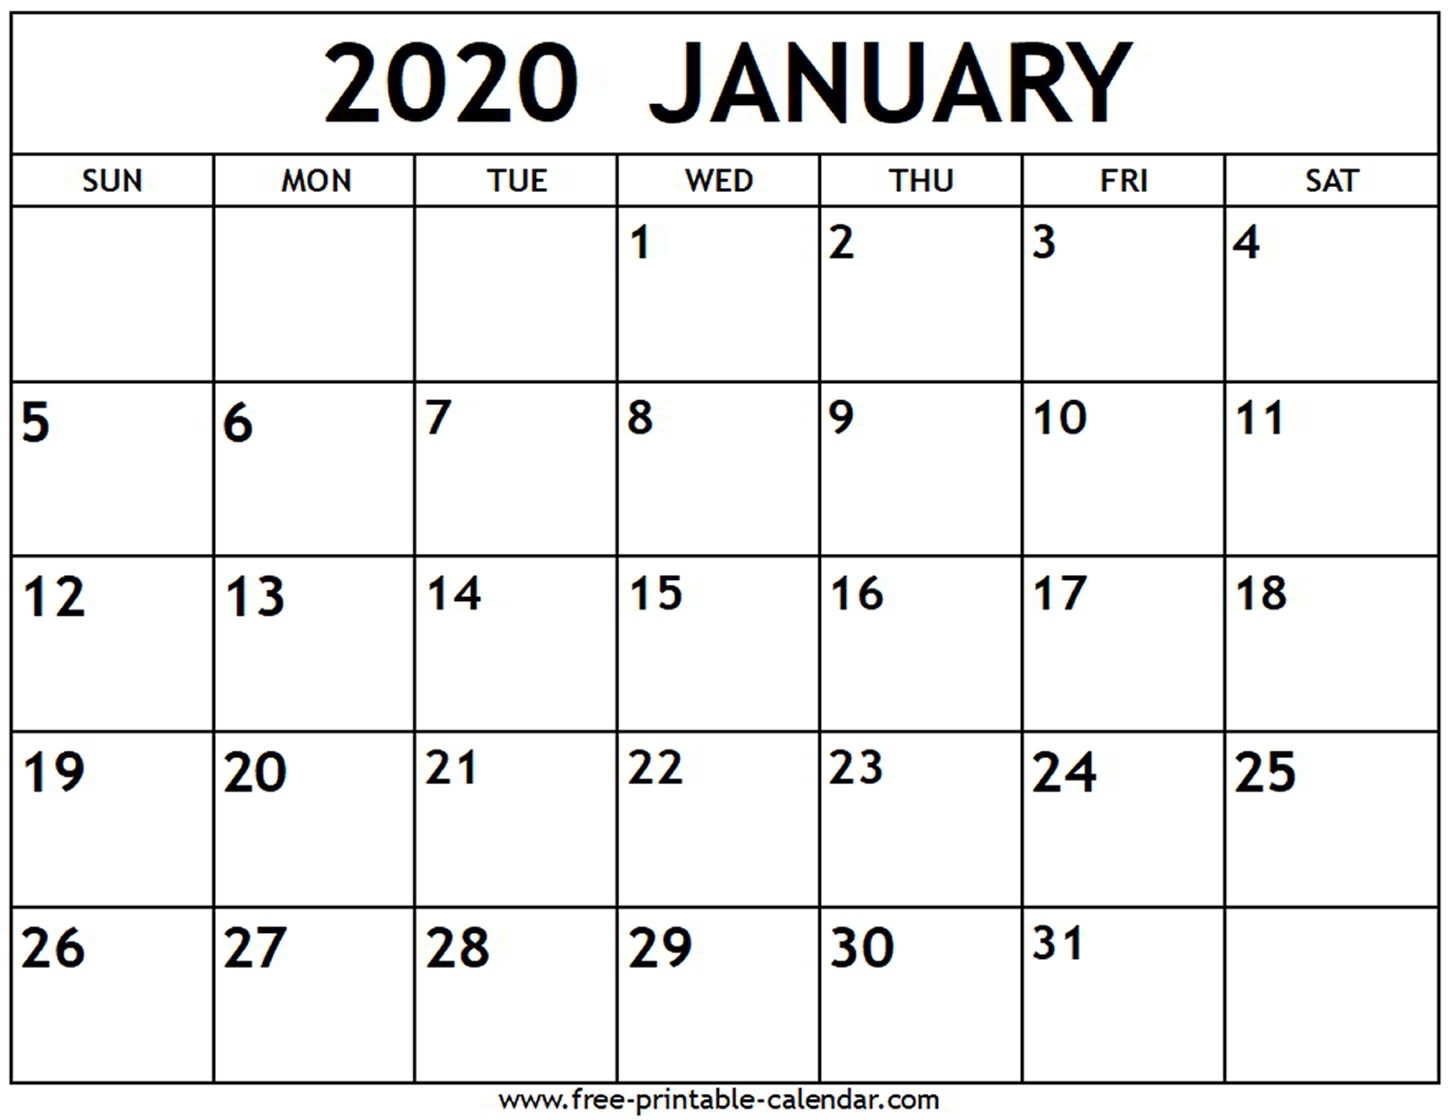 January 2020 Calendar - Free-Printable-Calendar-January 2020 Calendar Canada